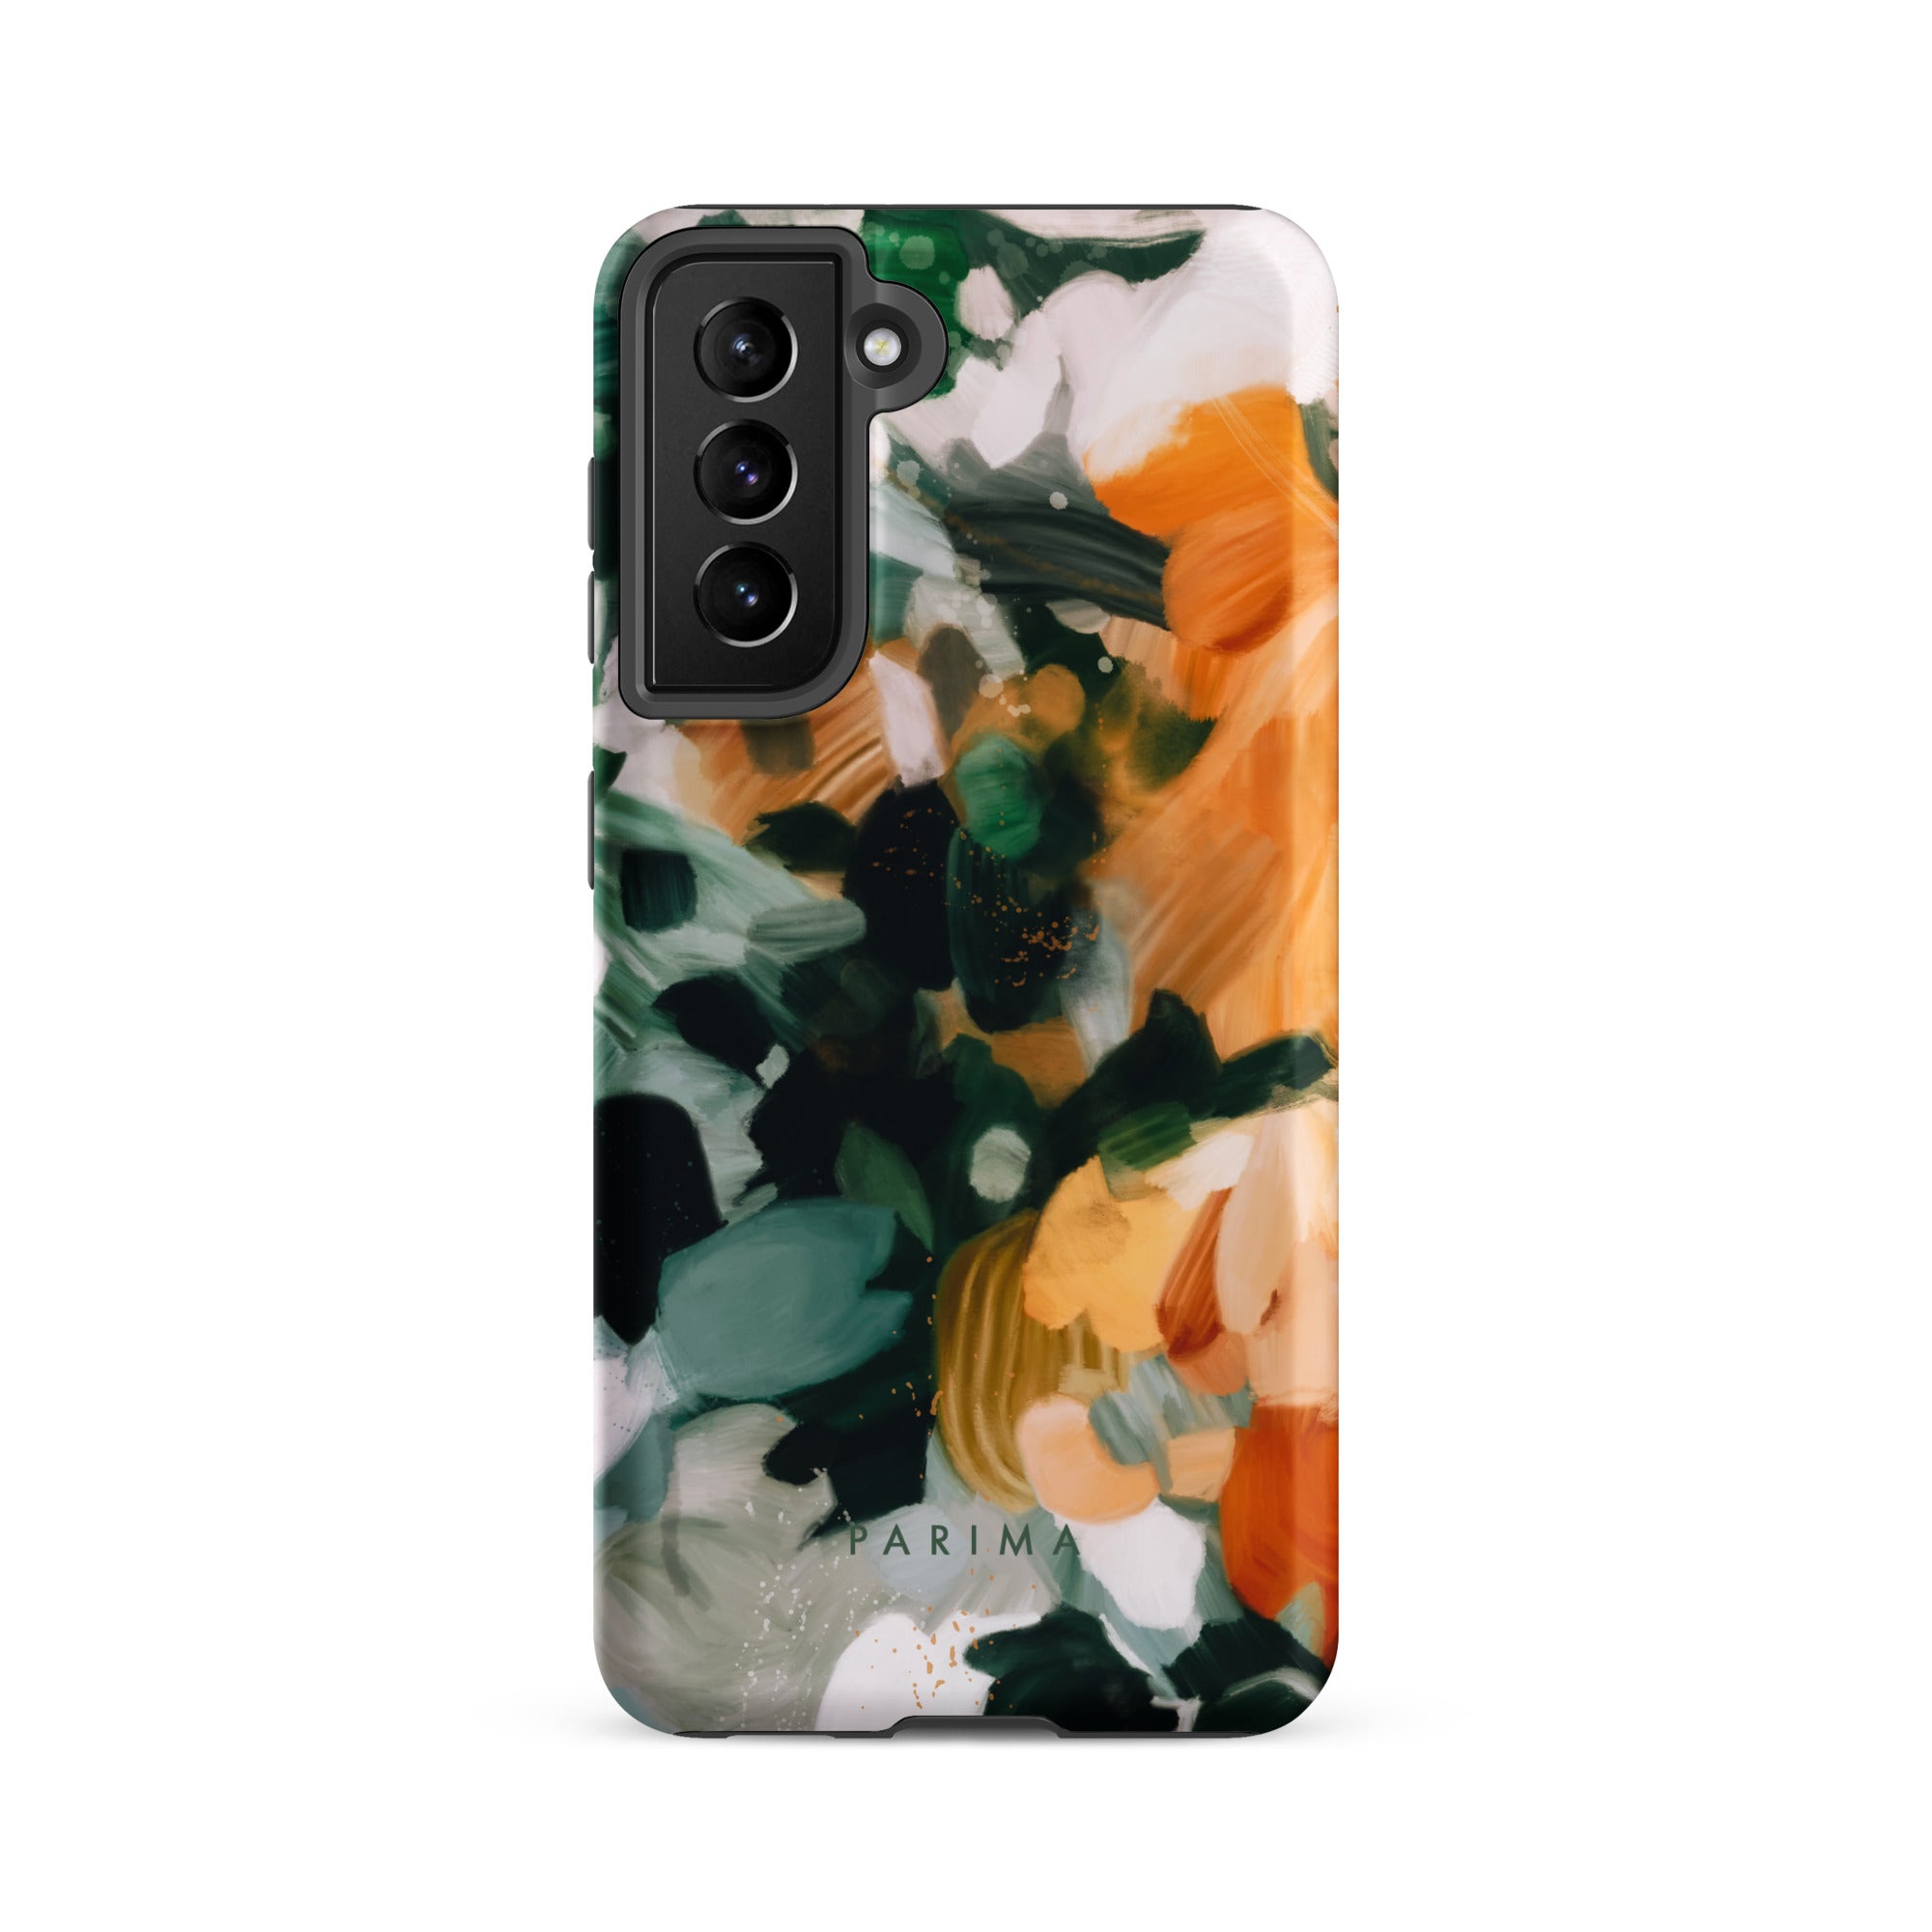 Aspen, green and orange abstract art on Samsung Galaxy S21 FE tough case by Parima Studio